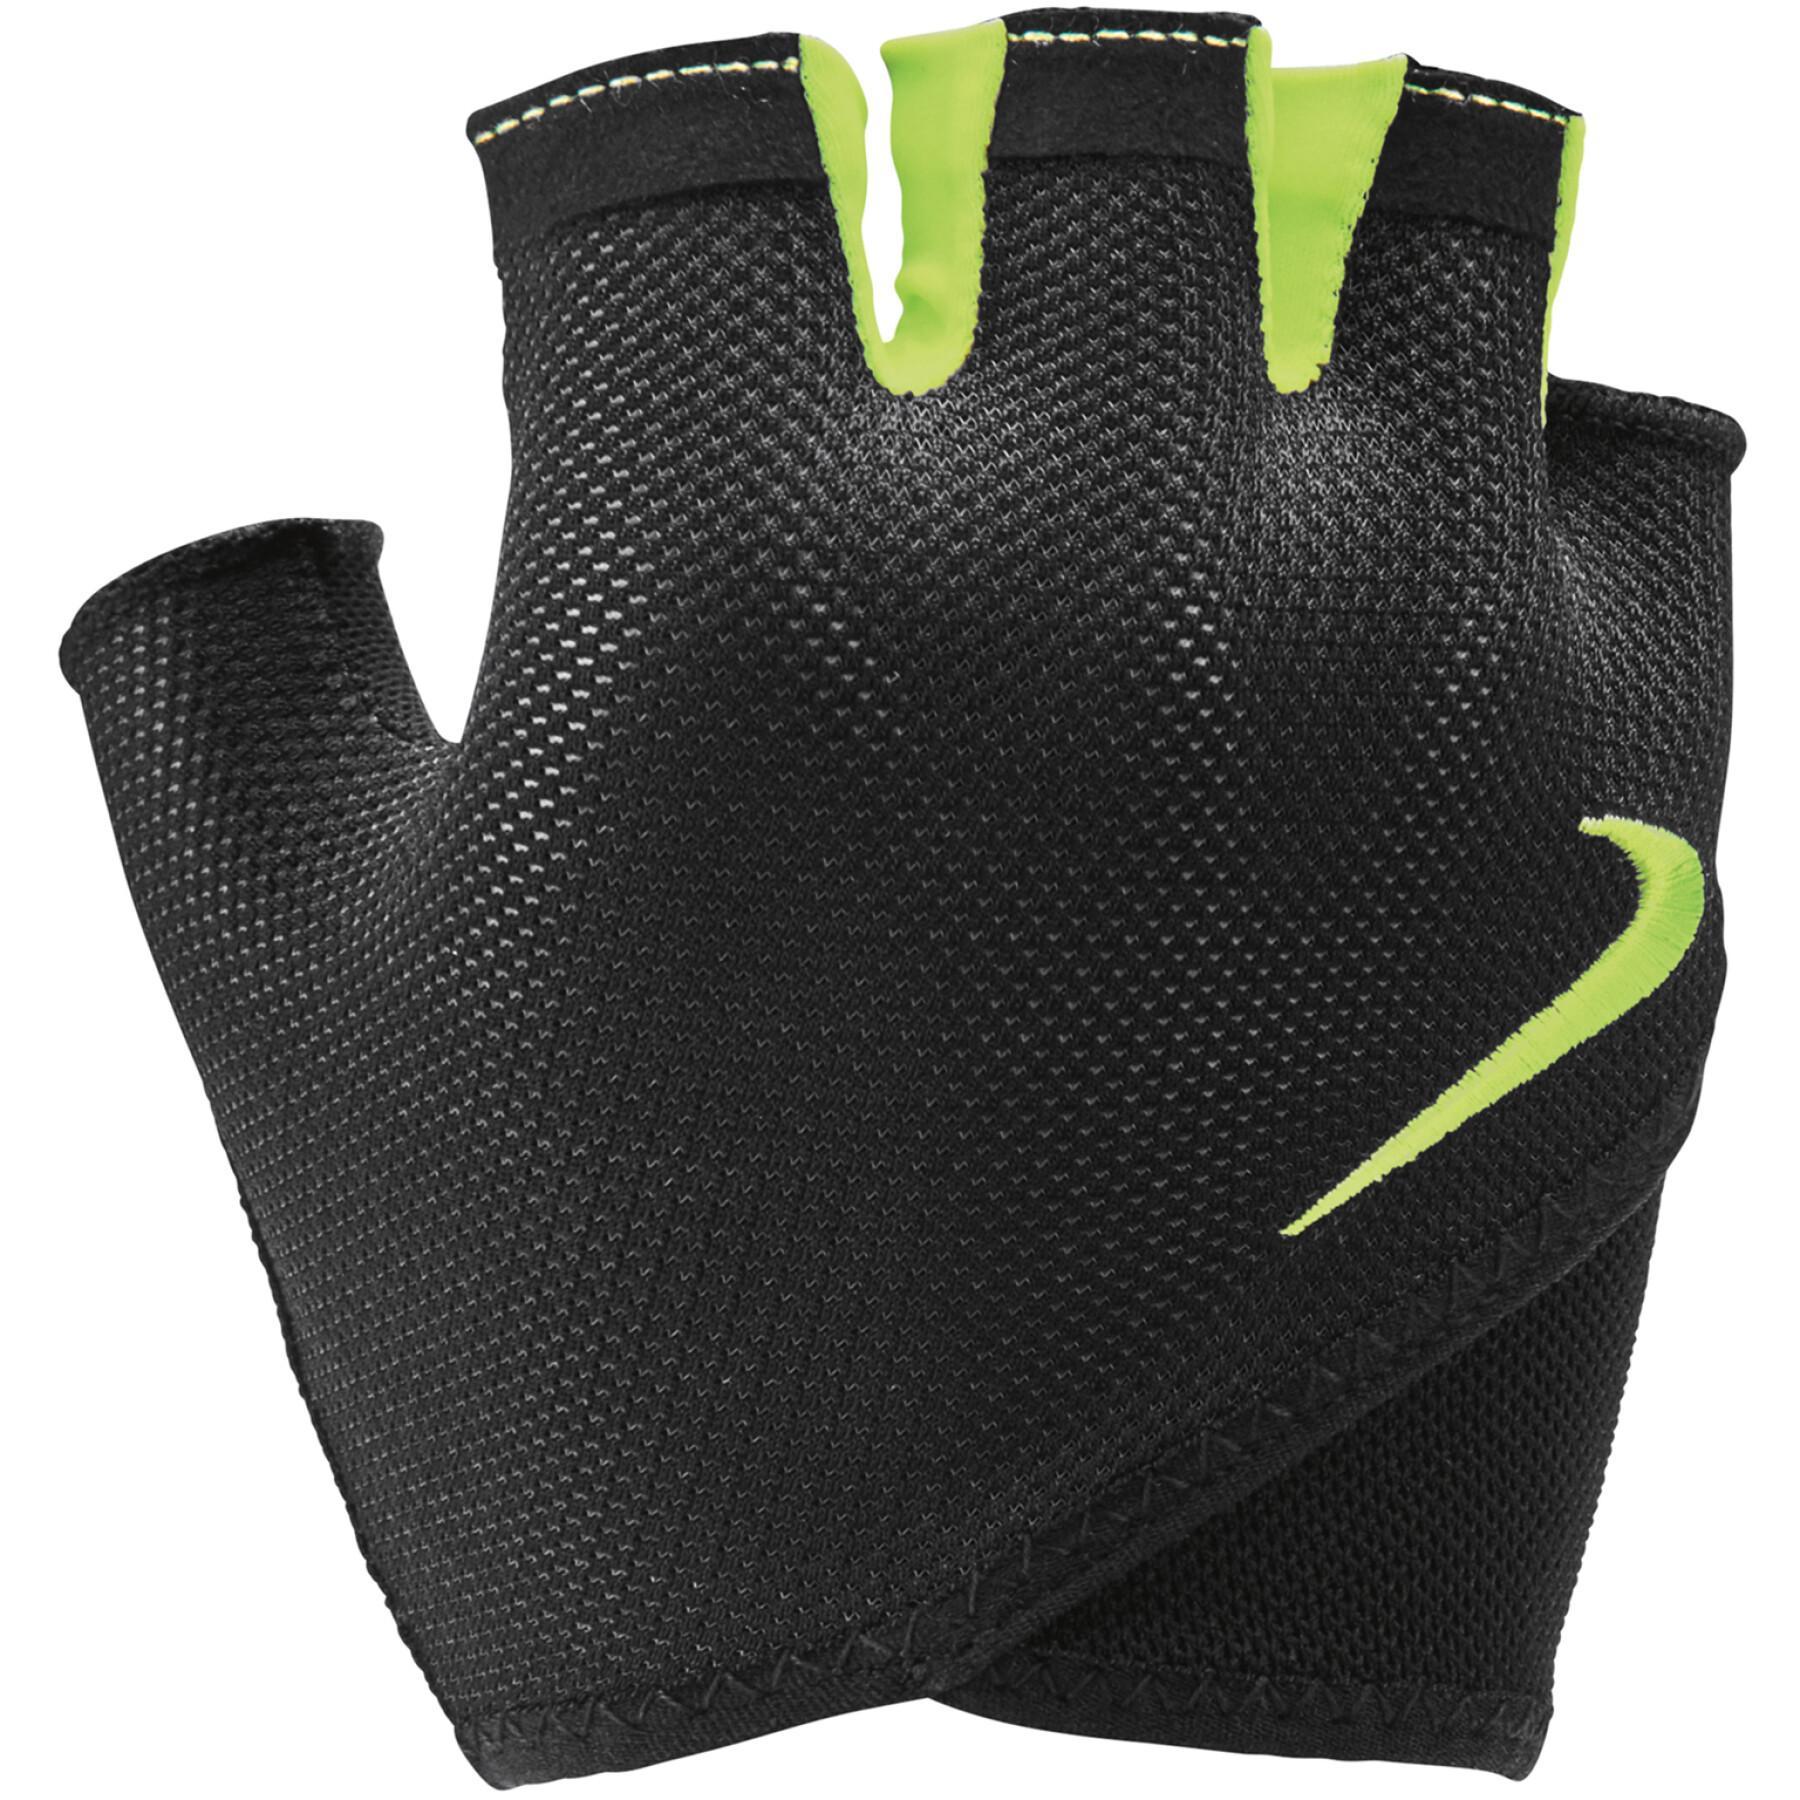 Women's mittens Nike essential fitness